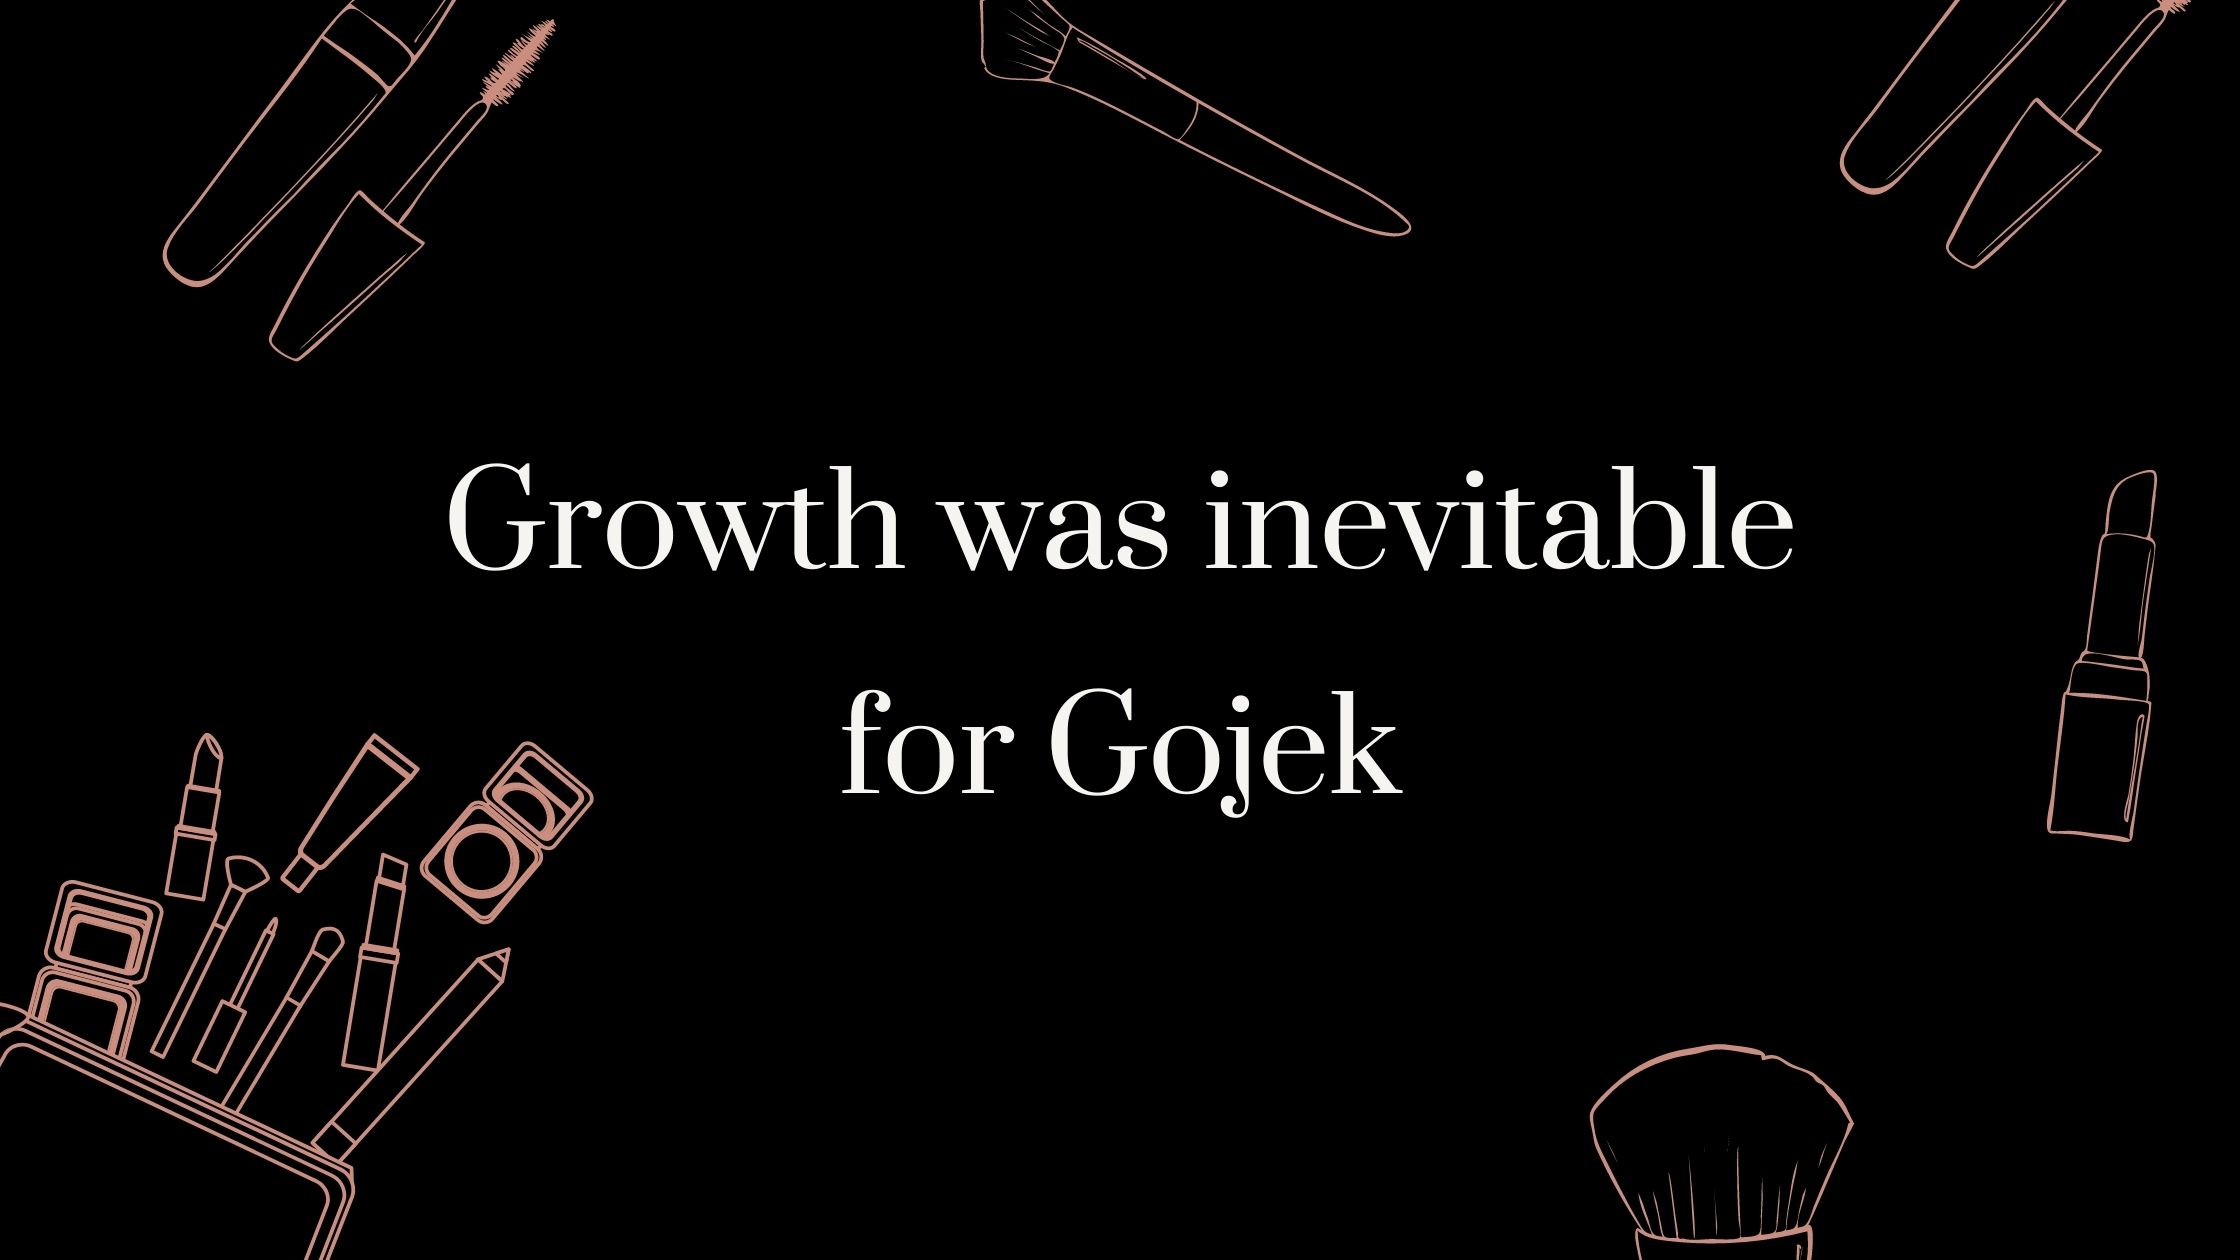 Growth was inevitable for Gojek